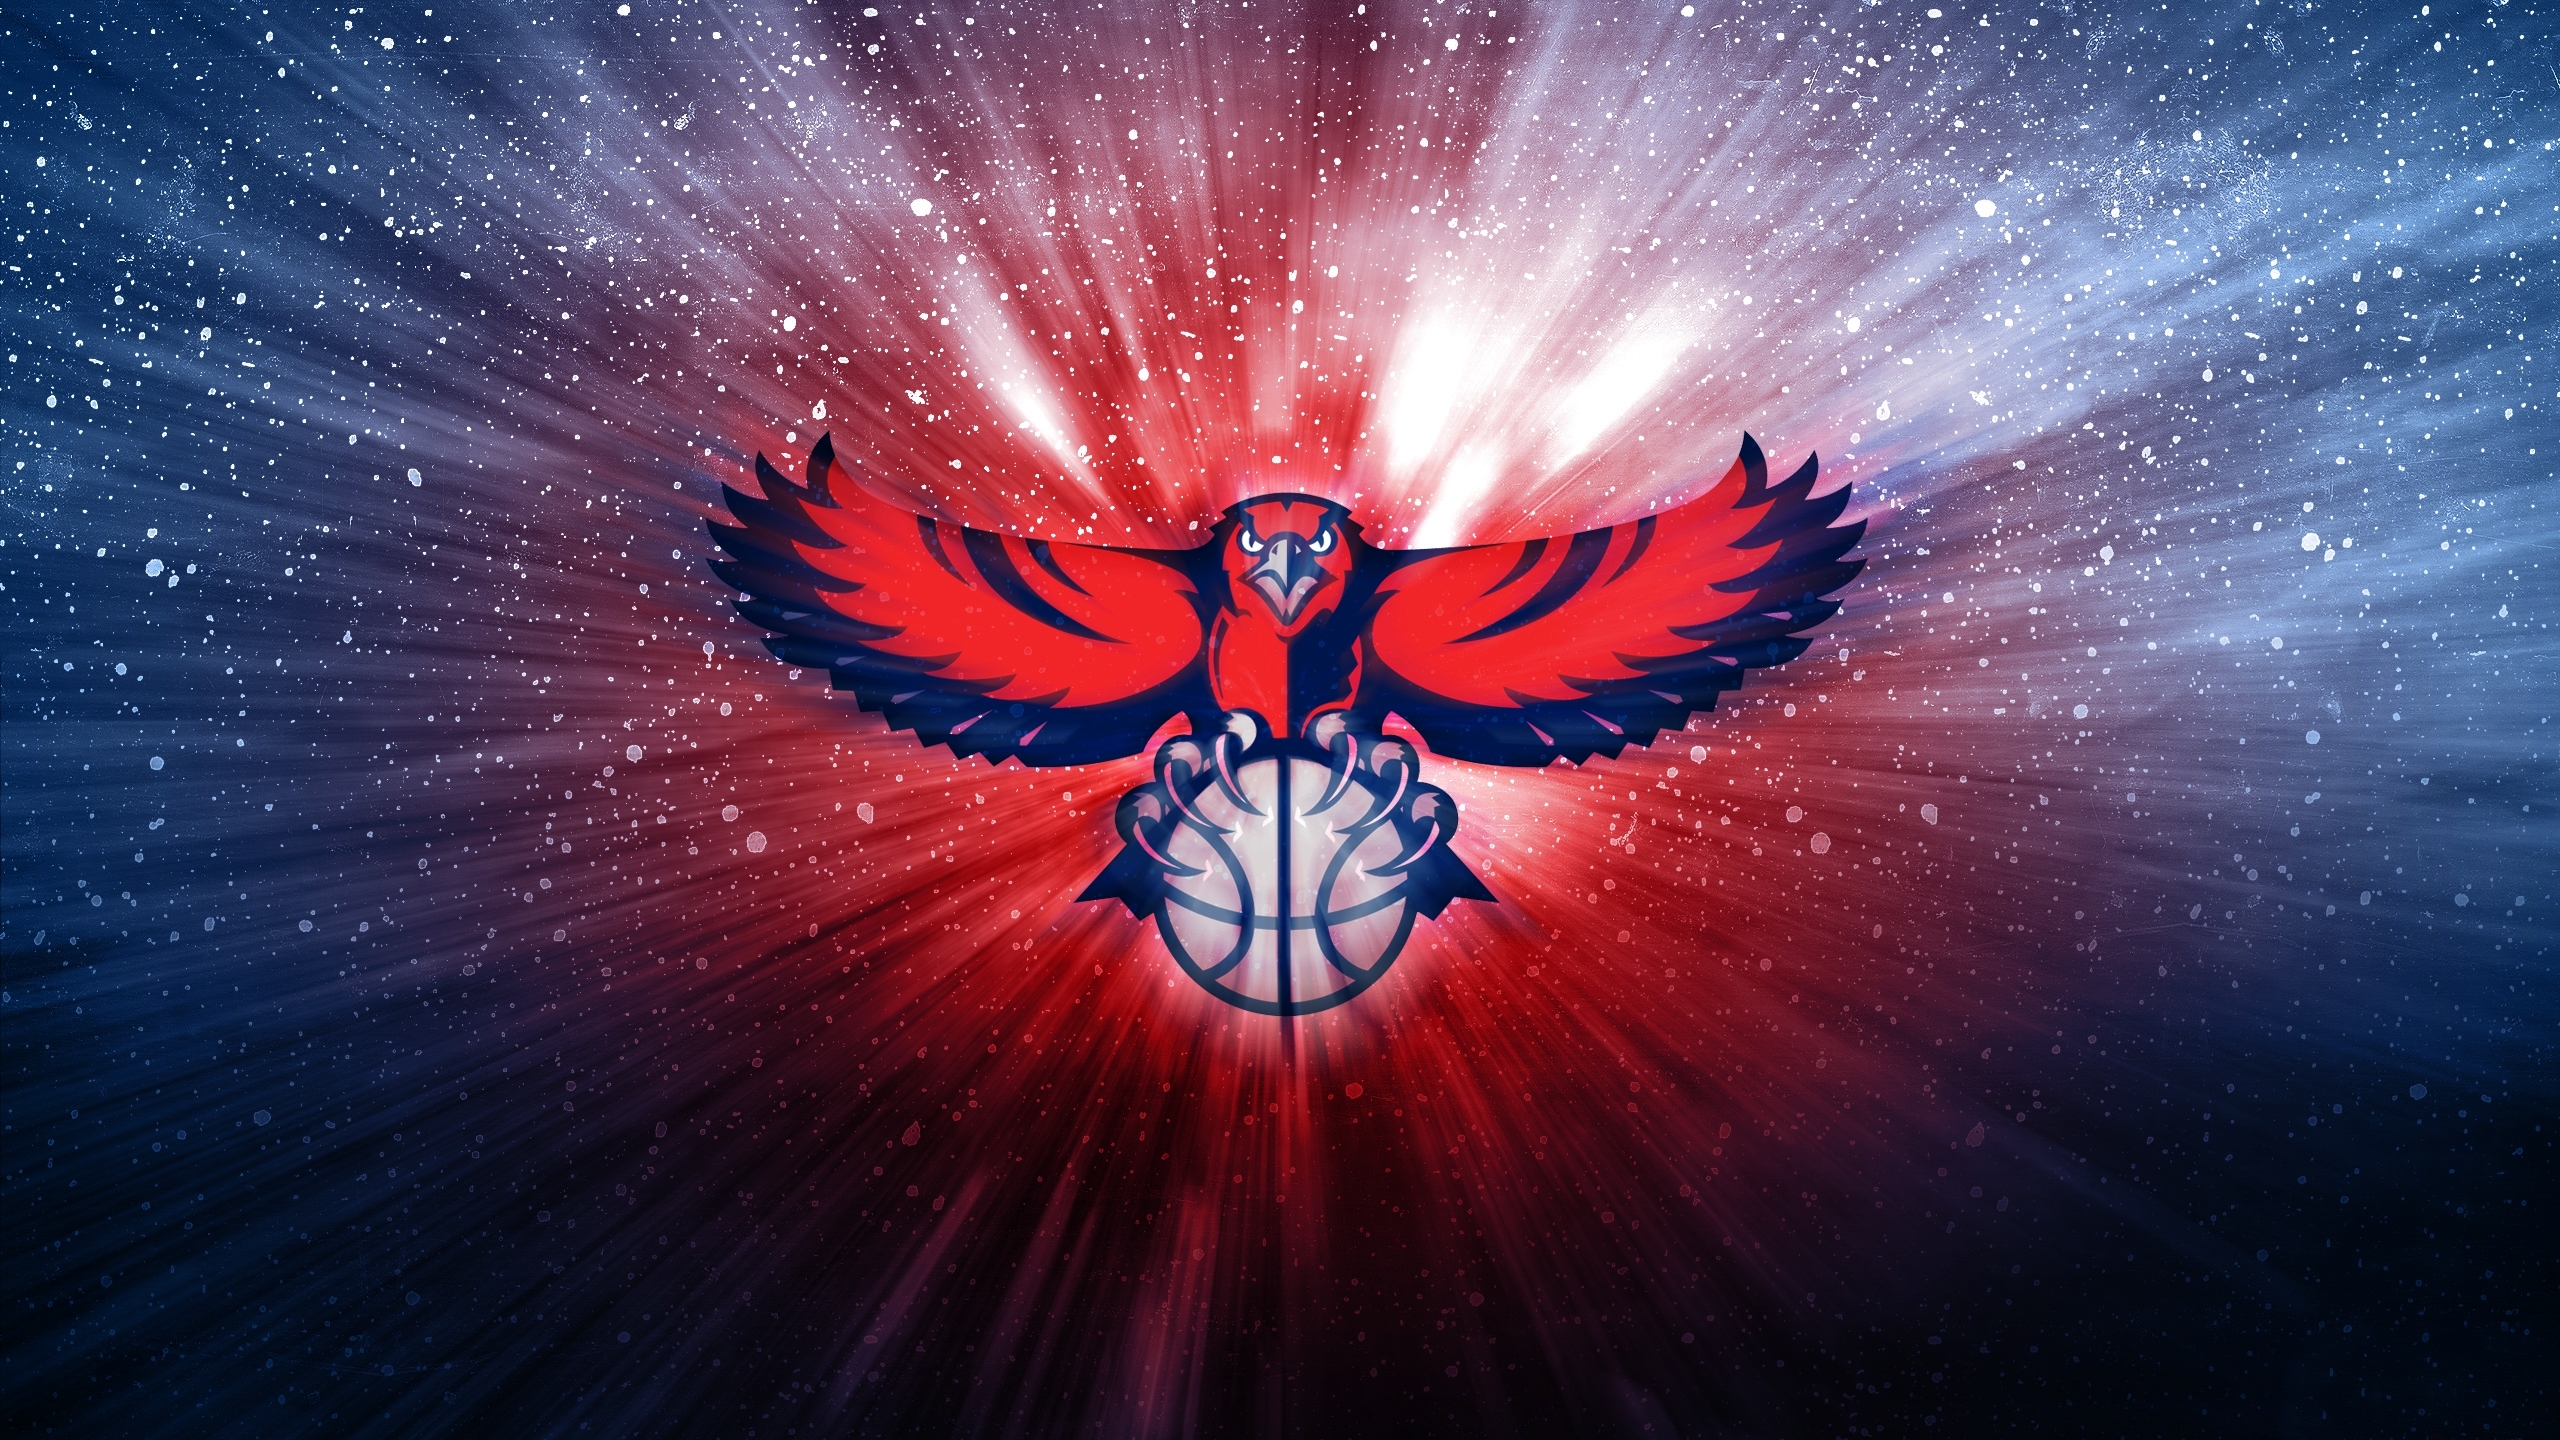 Download Trae Young NBA Hawks Wallpaper